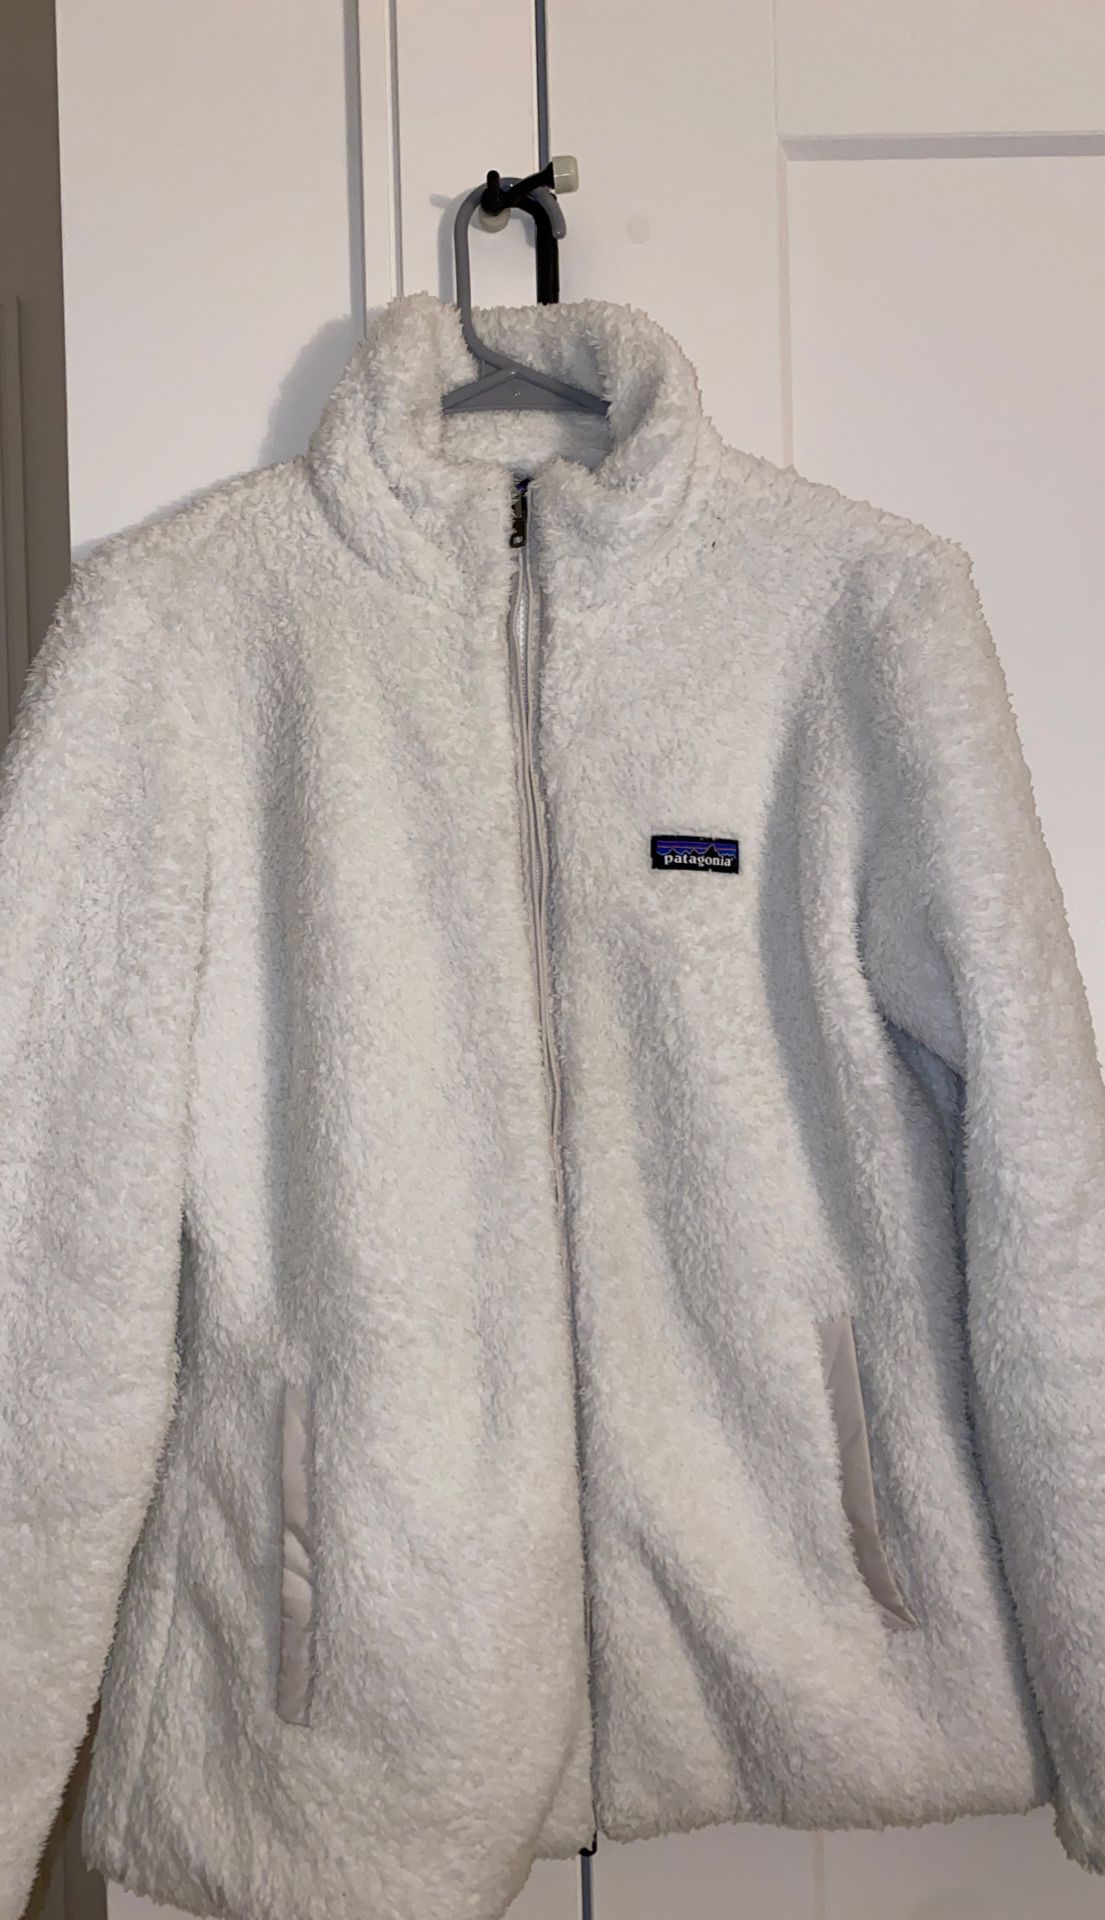 Patagonia White Fluffy Zip Up Jacket